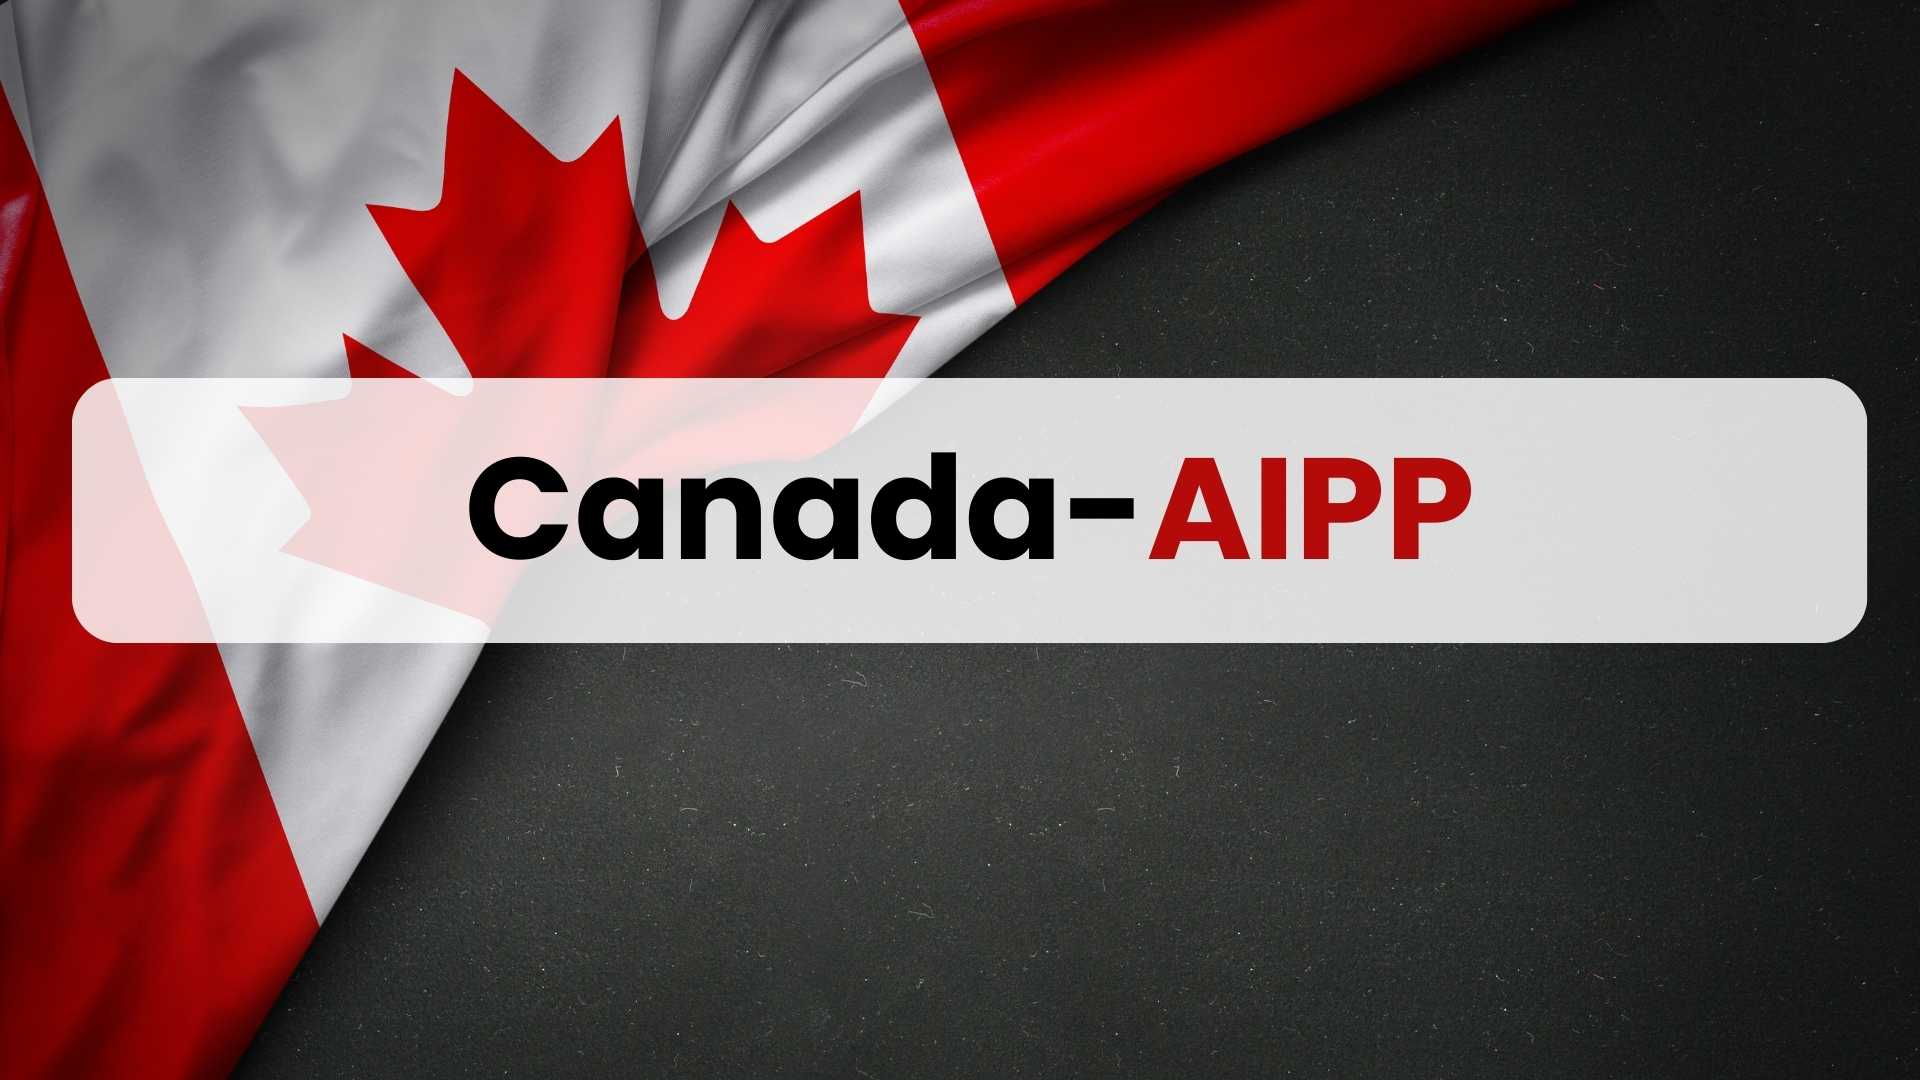 Canada-AIPP (Atlantic Immigration Pilot Program)